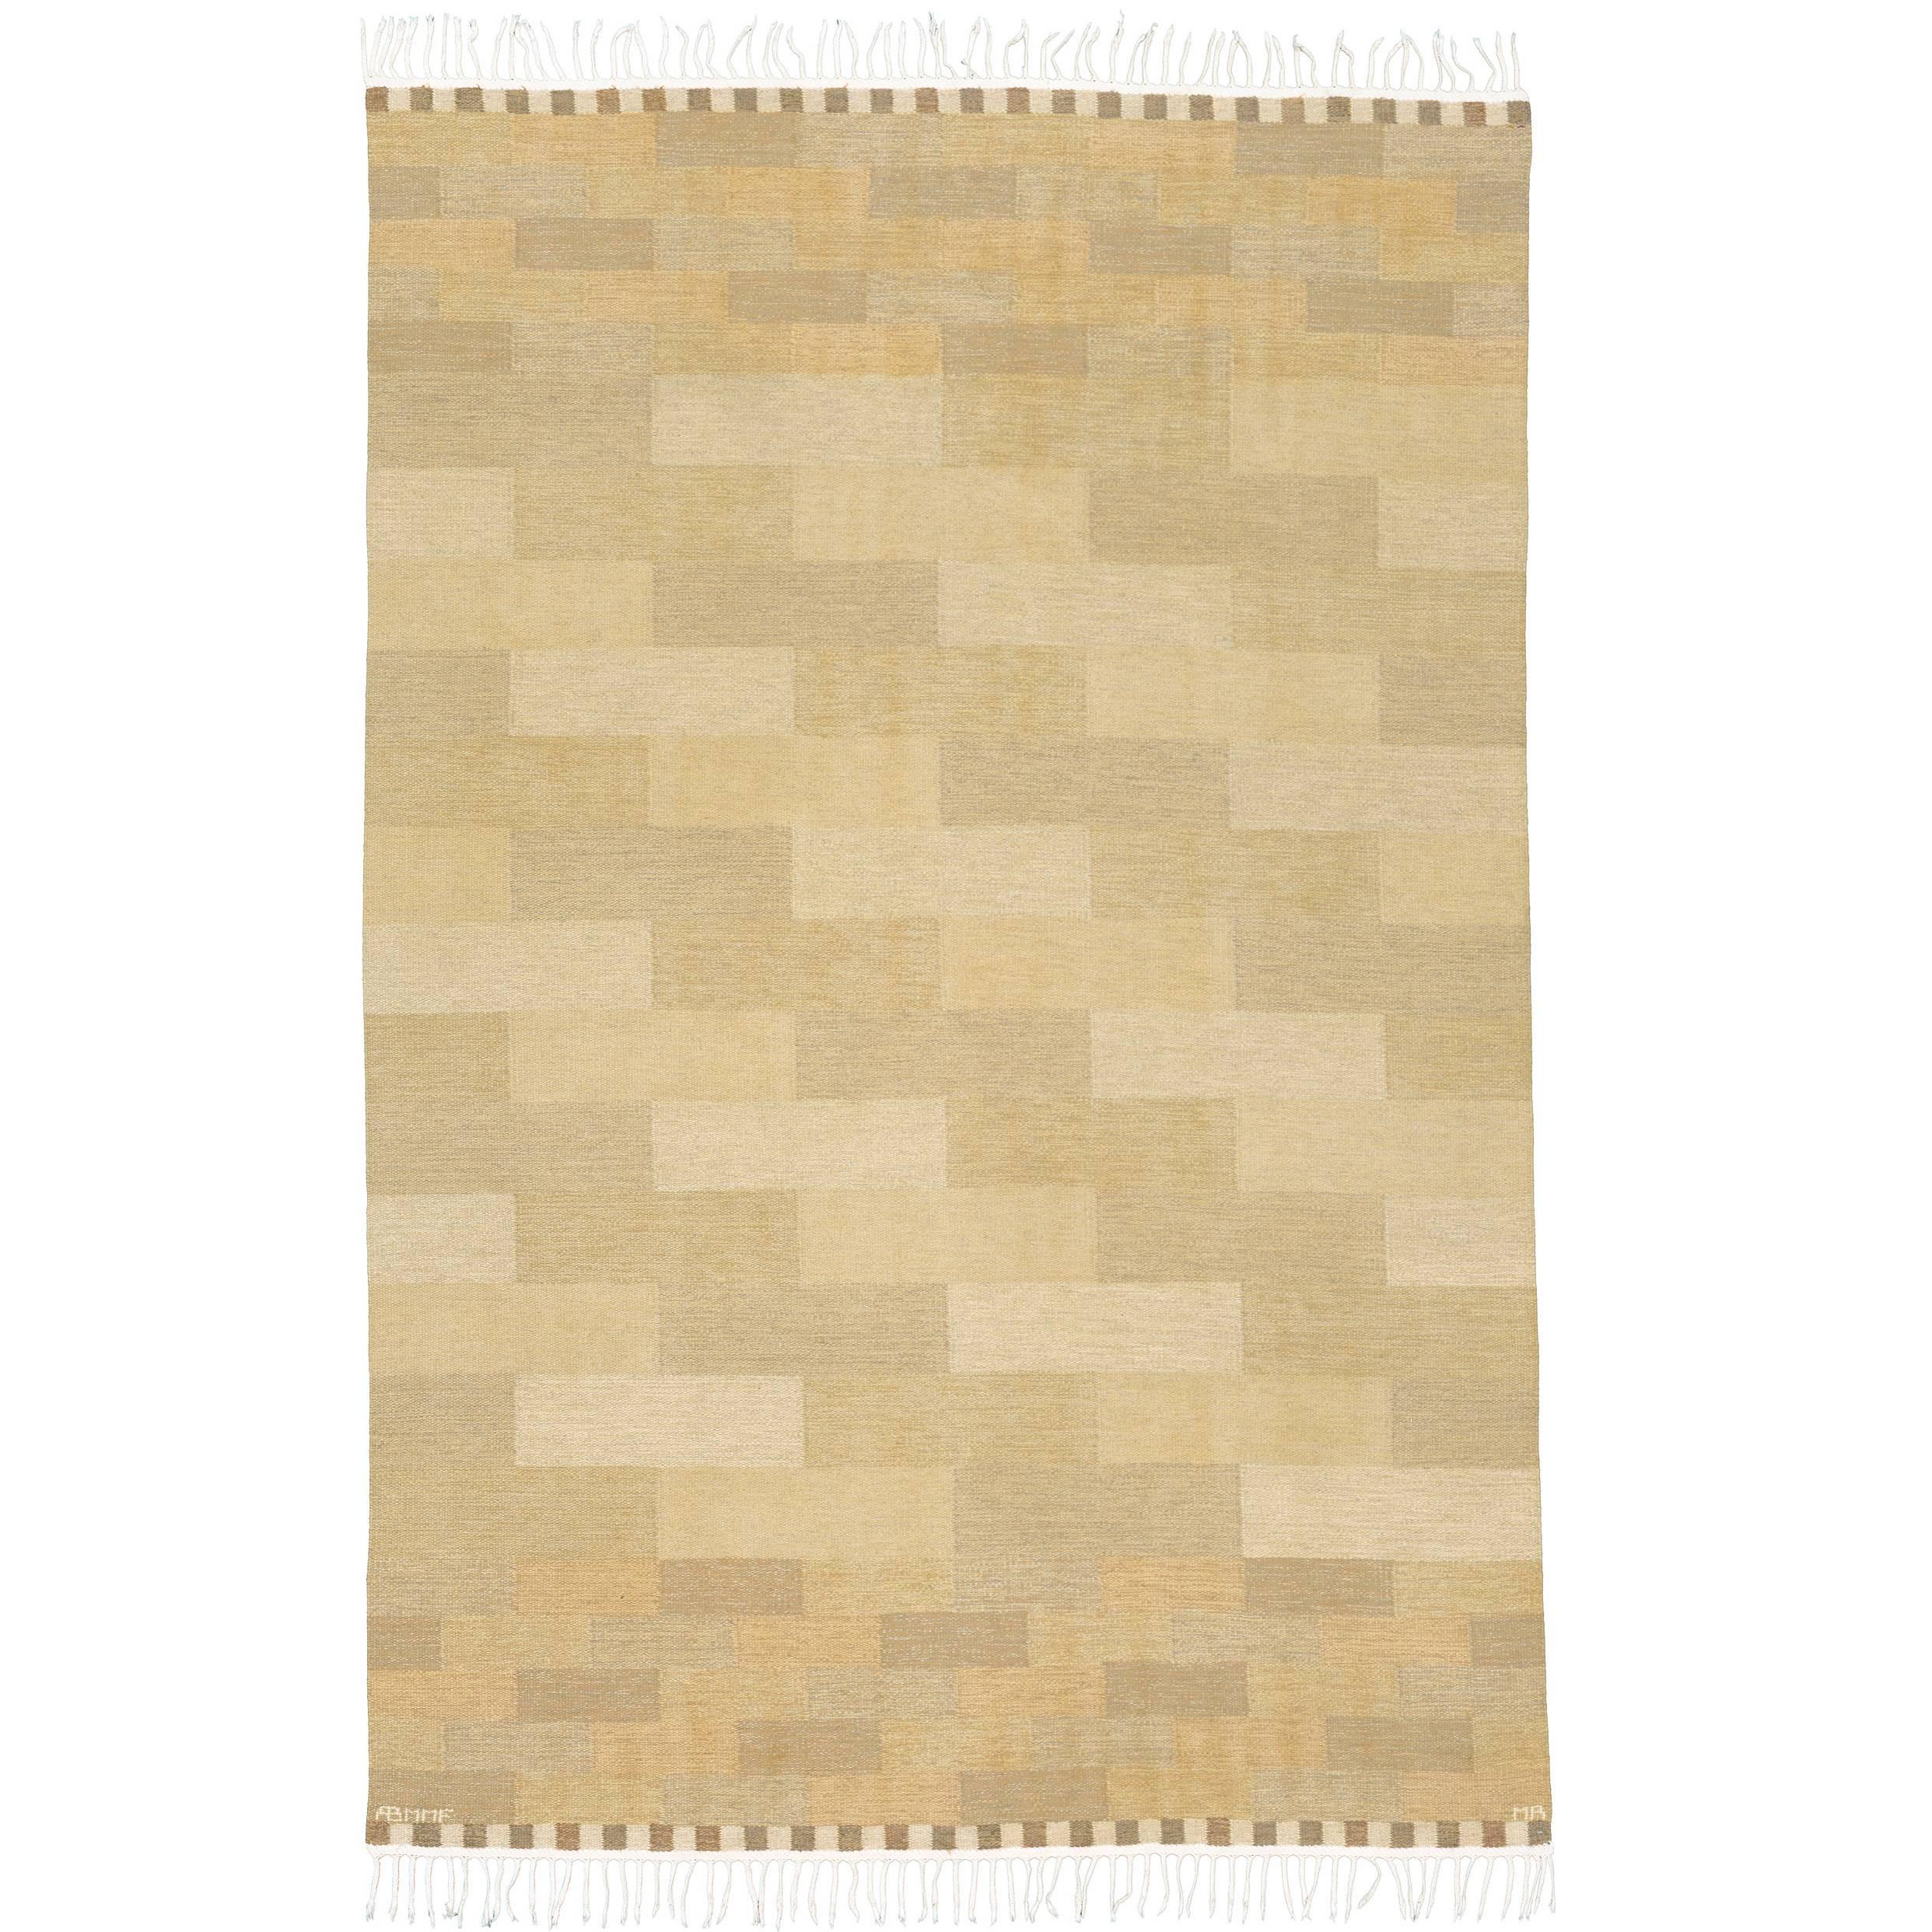 Late 20th Century Swedish Flat-Weave Carpet